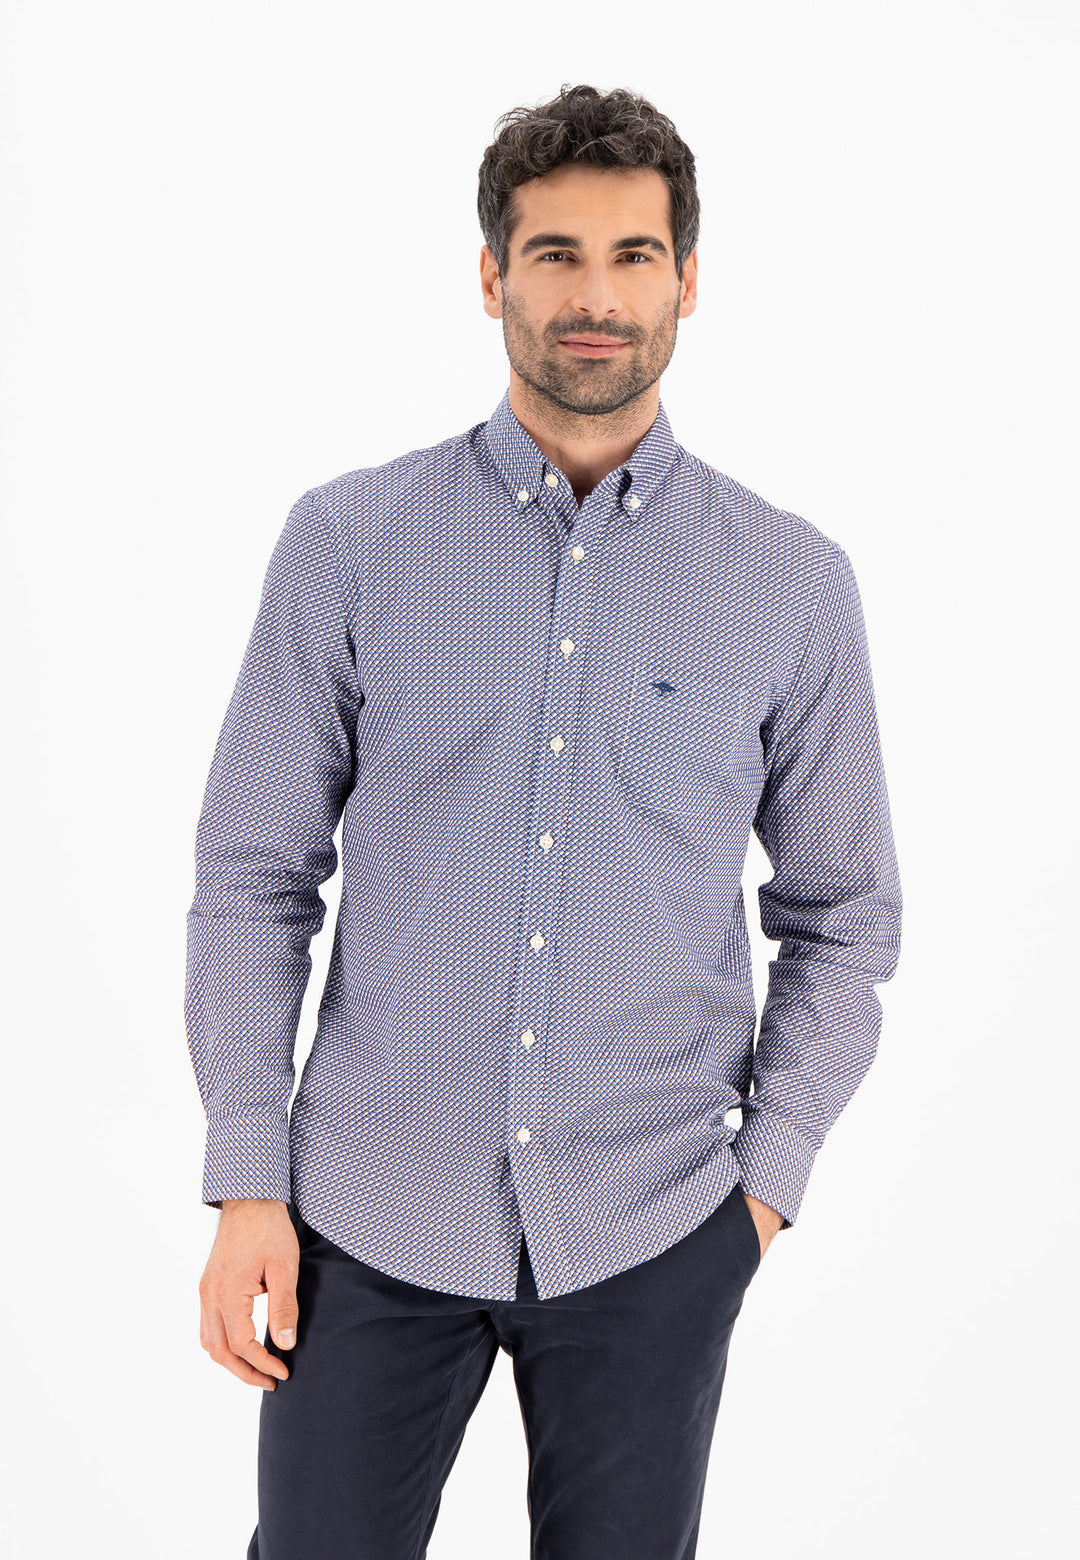 Men\'s shirts | Fynch-Hatton shop Online official – FYNCH-HATTON Offizieller Shop | online